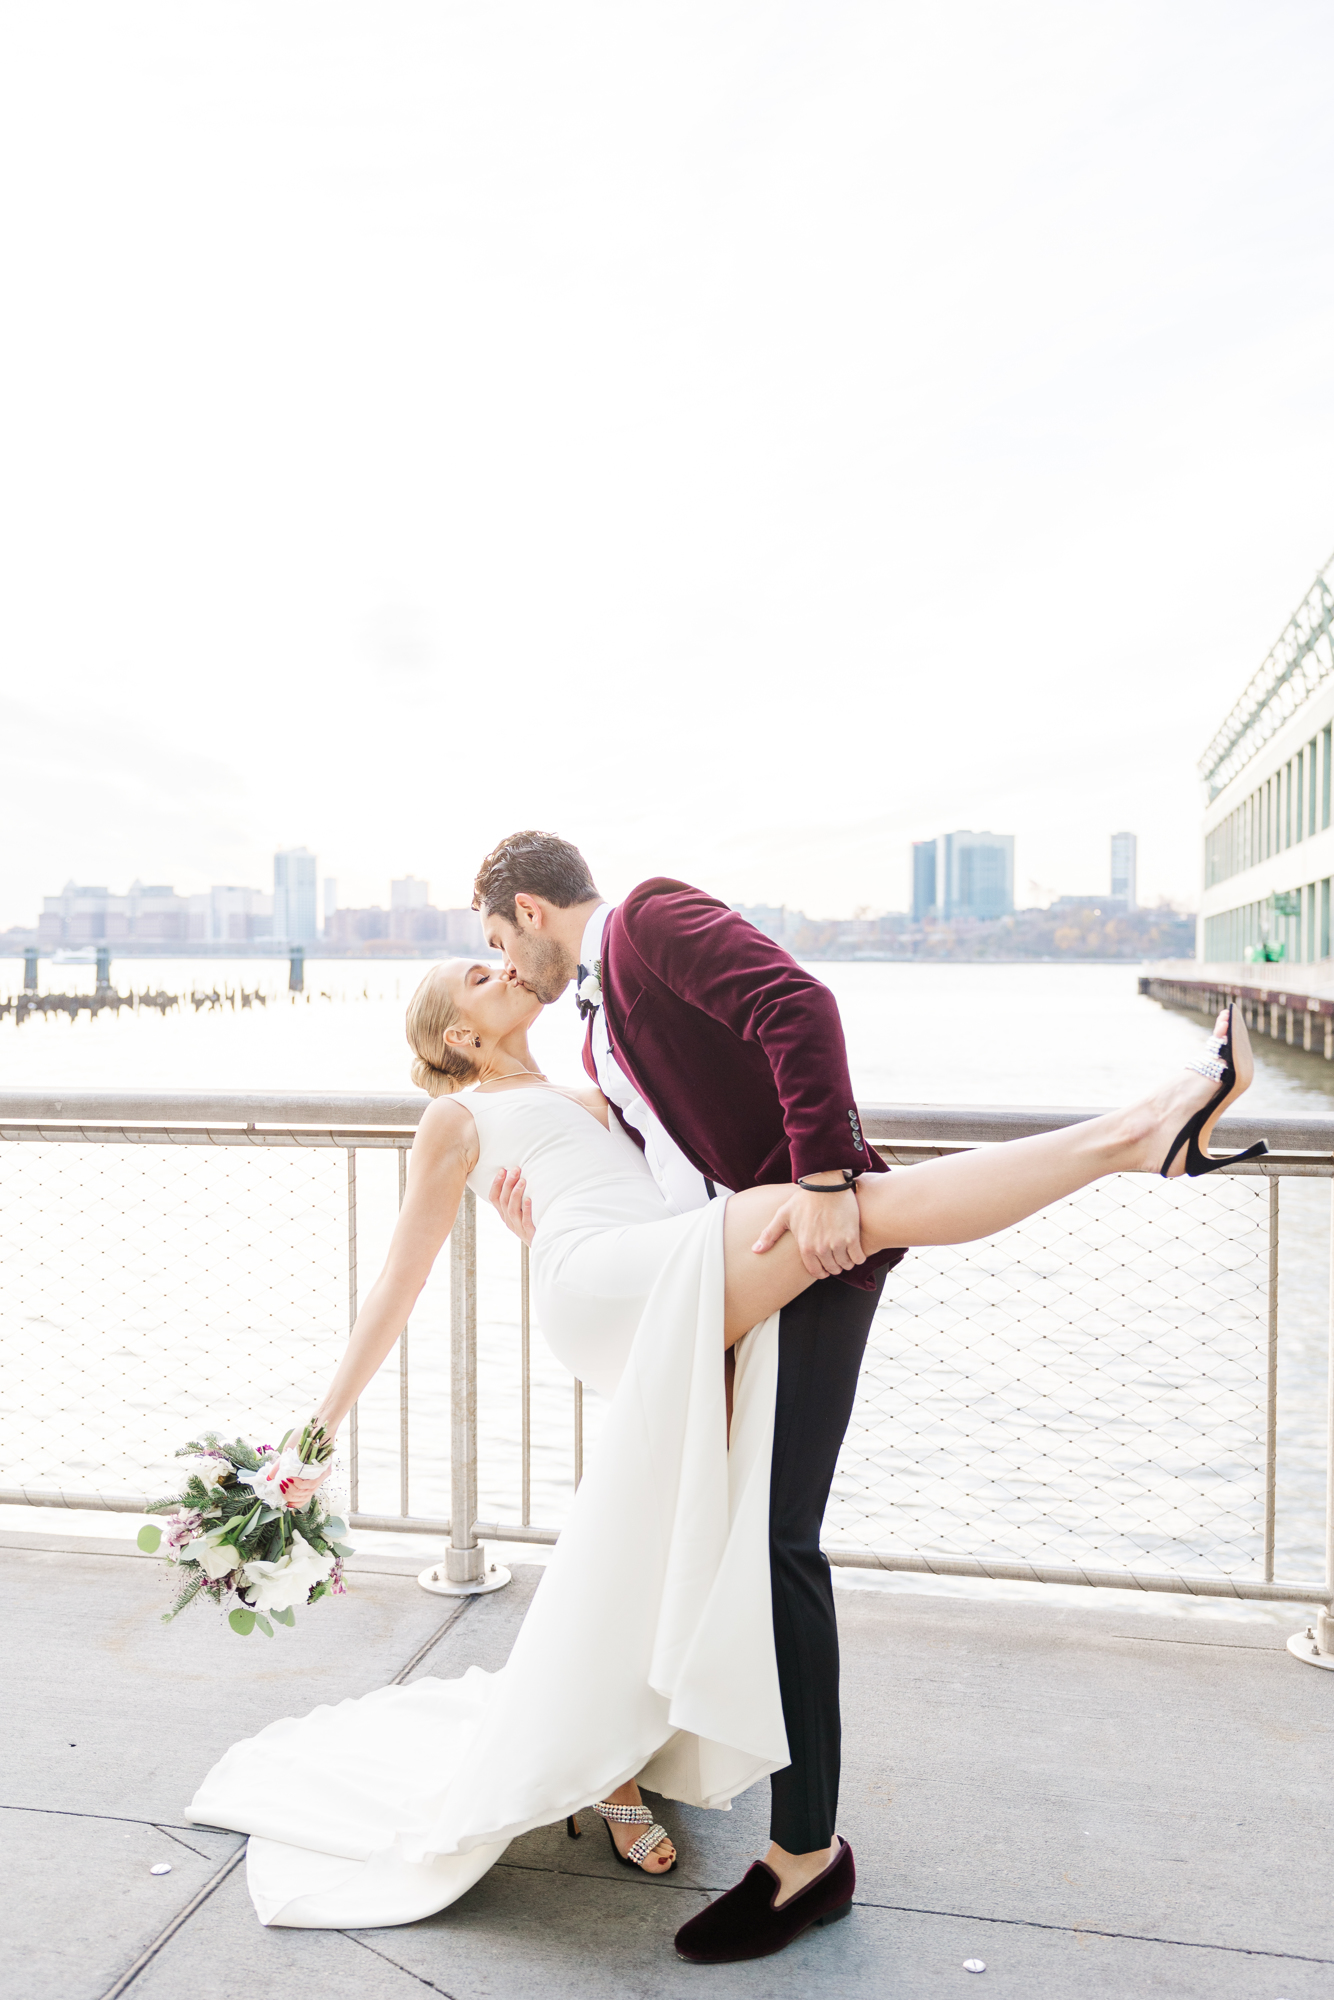 Breathtaking New York Wedding Photography at City Winery